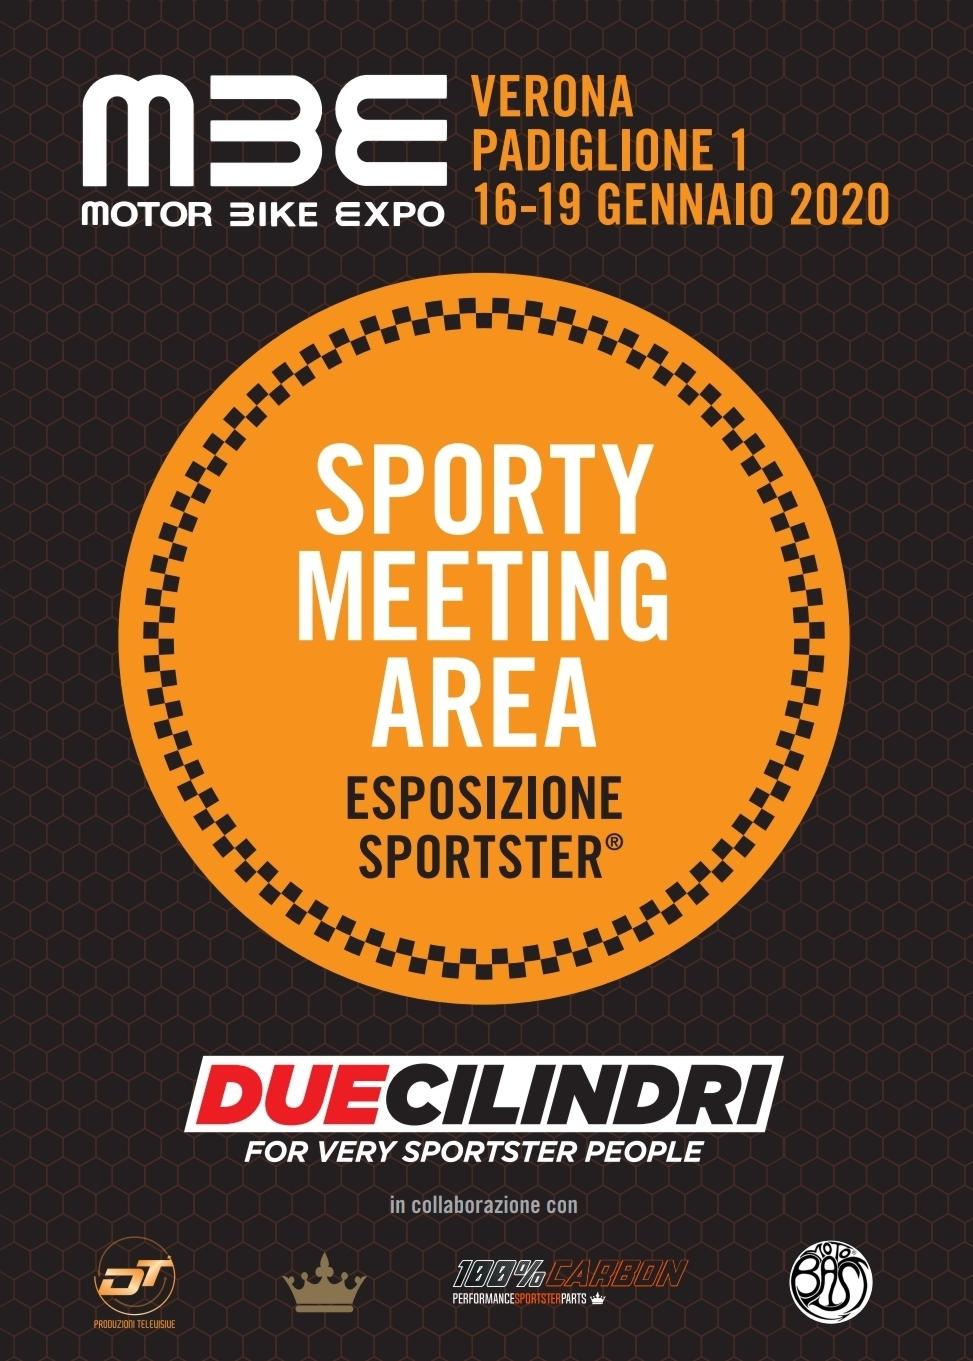 Duecilindri blog Motor Bike Expo 2020